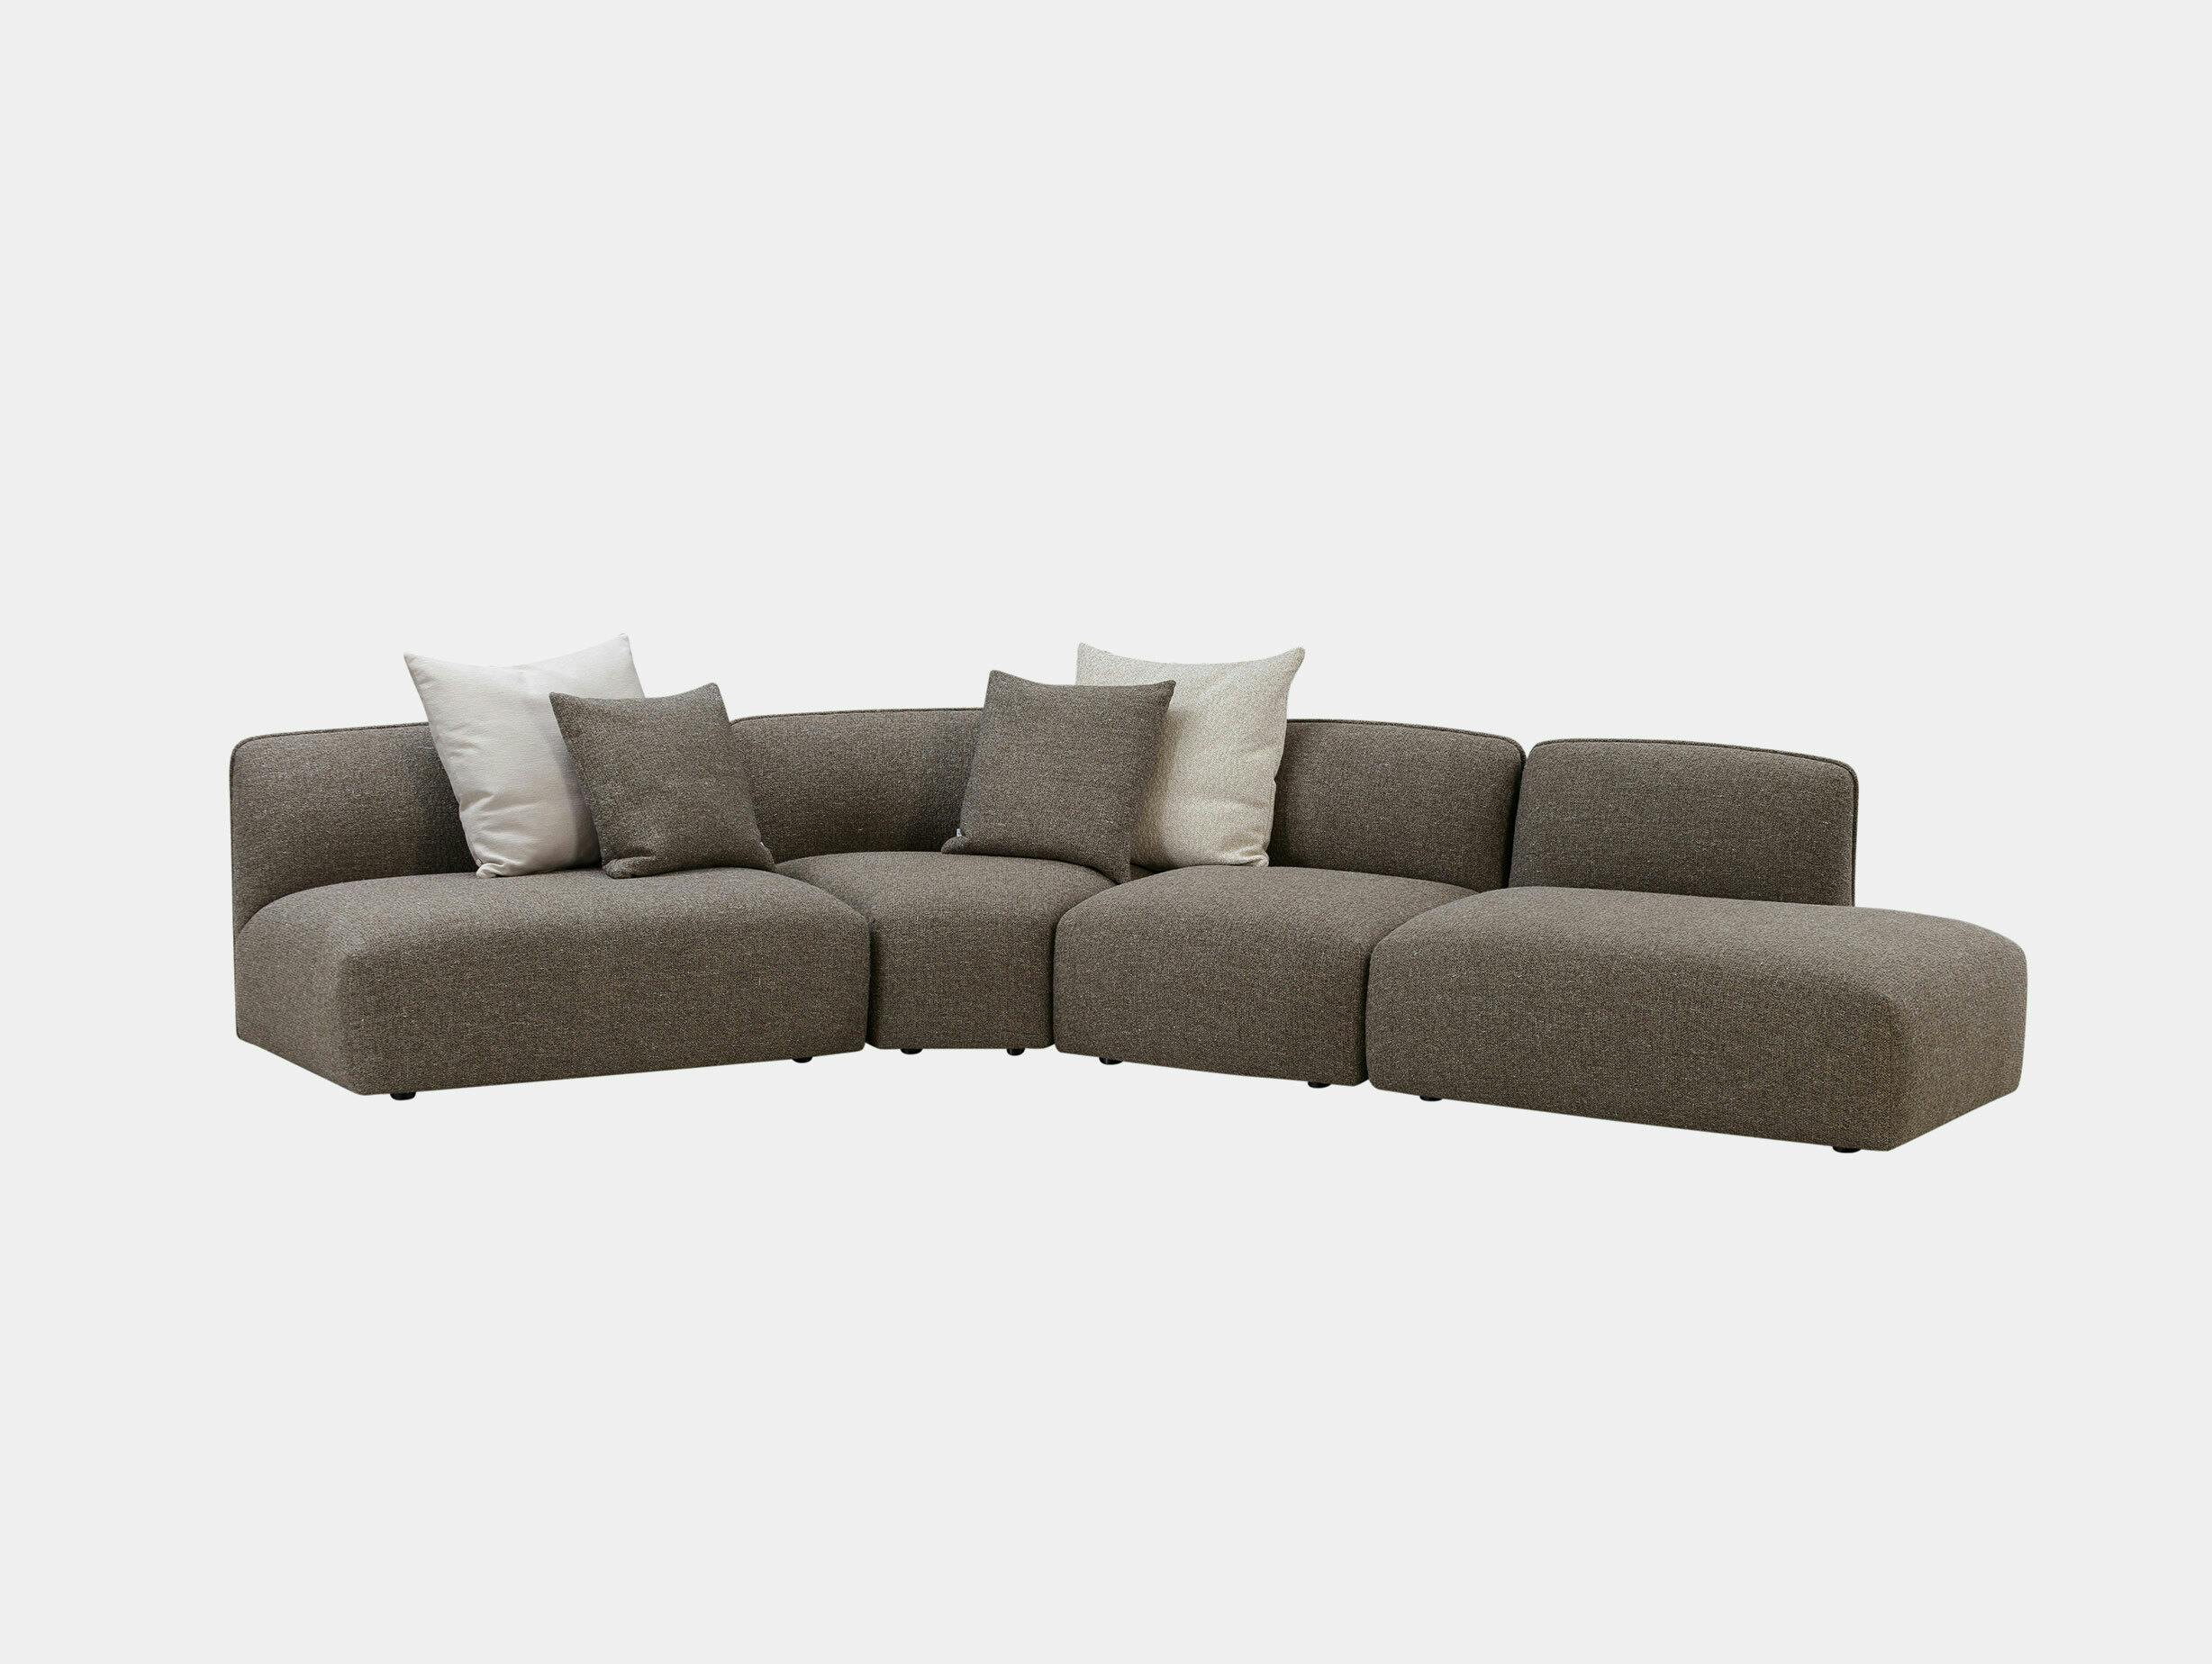 Wendelbo jonas wagell panorama sofa configuration 1 bosa col 8